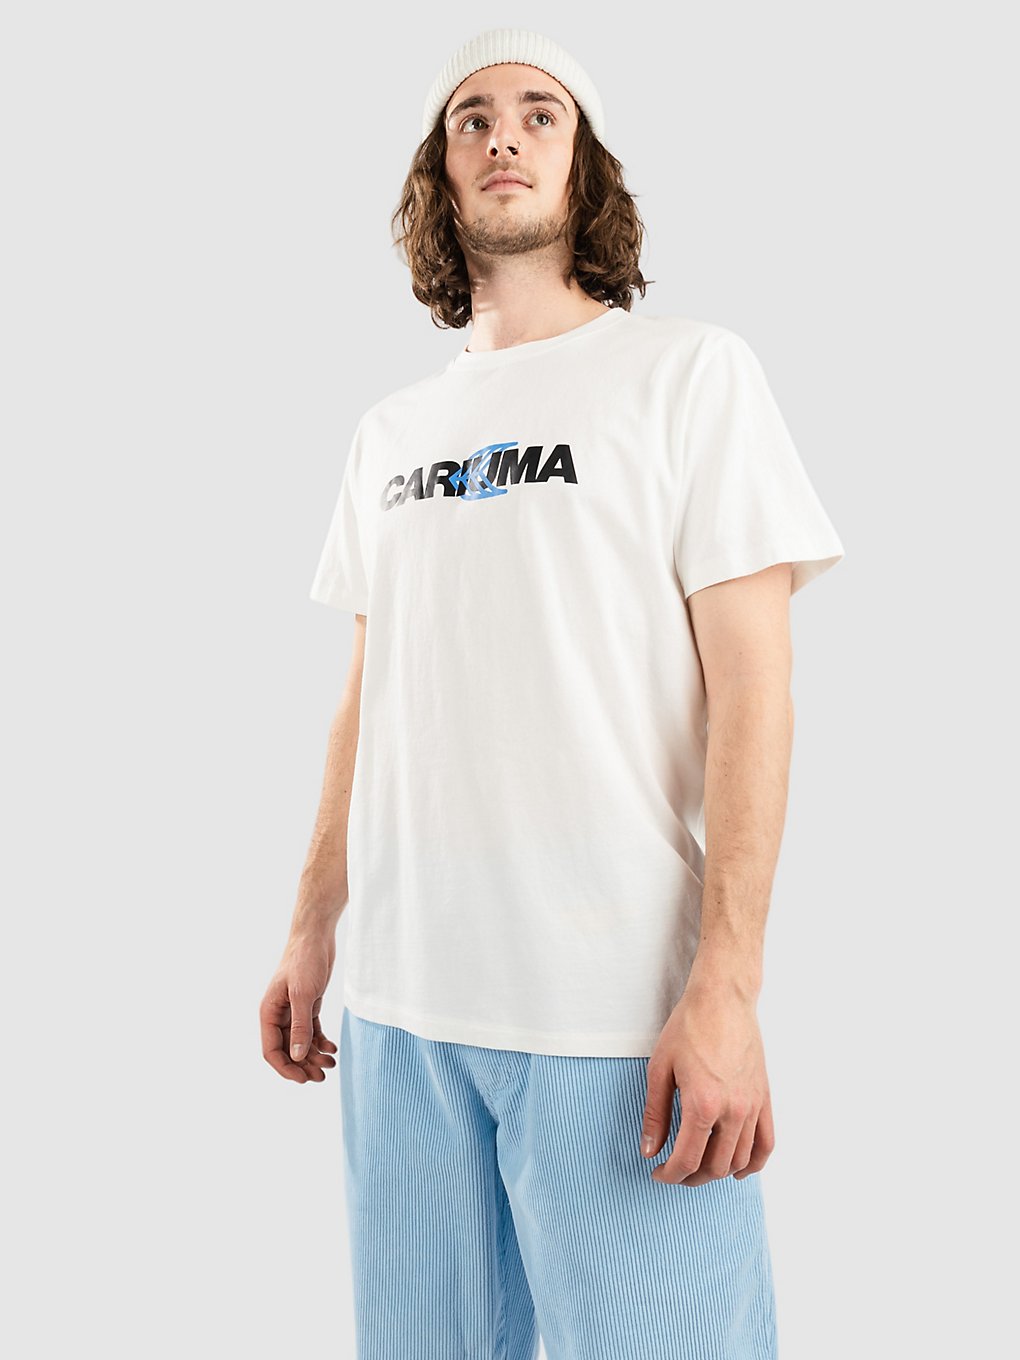 Cariuma Duo Logo T-Shirt black and blue kaufen